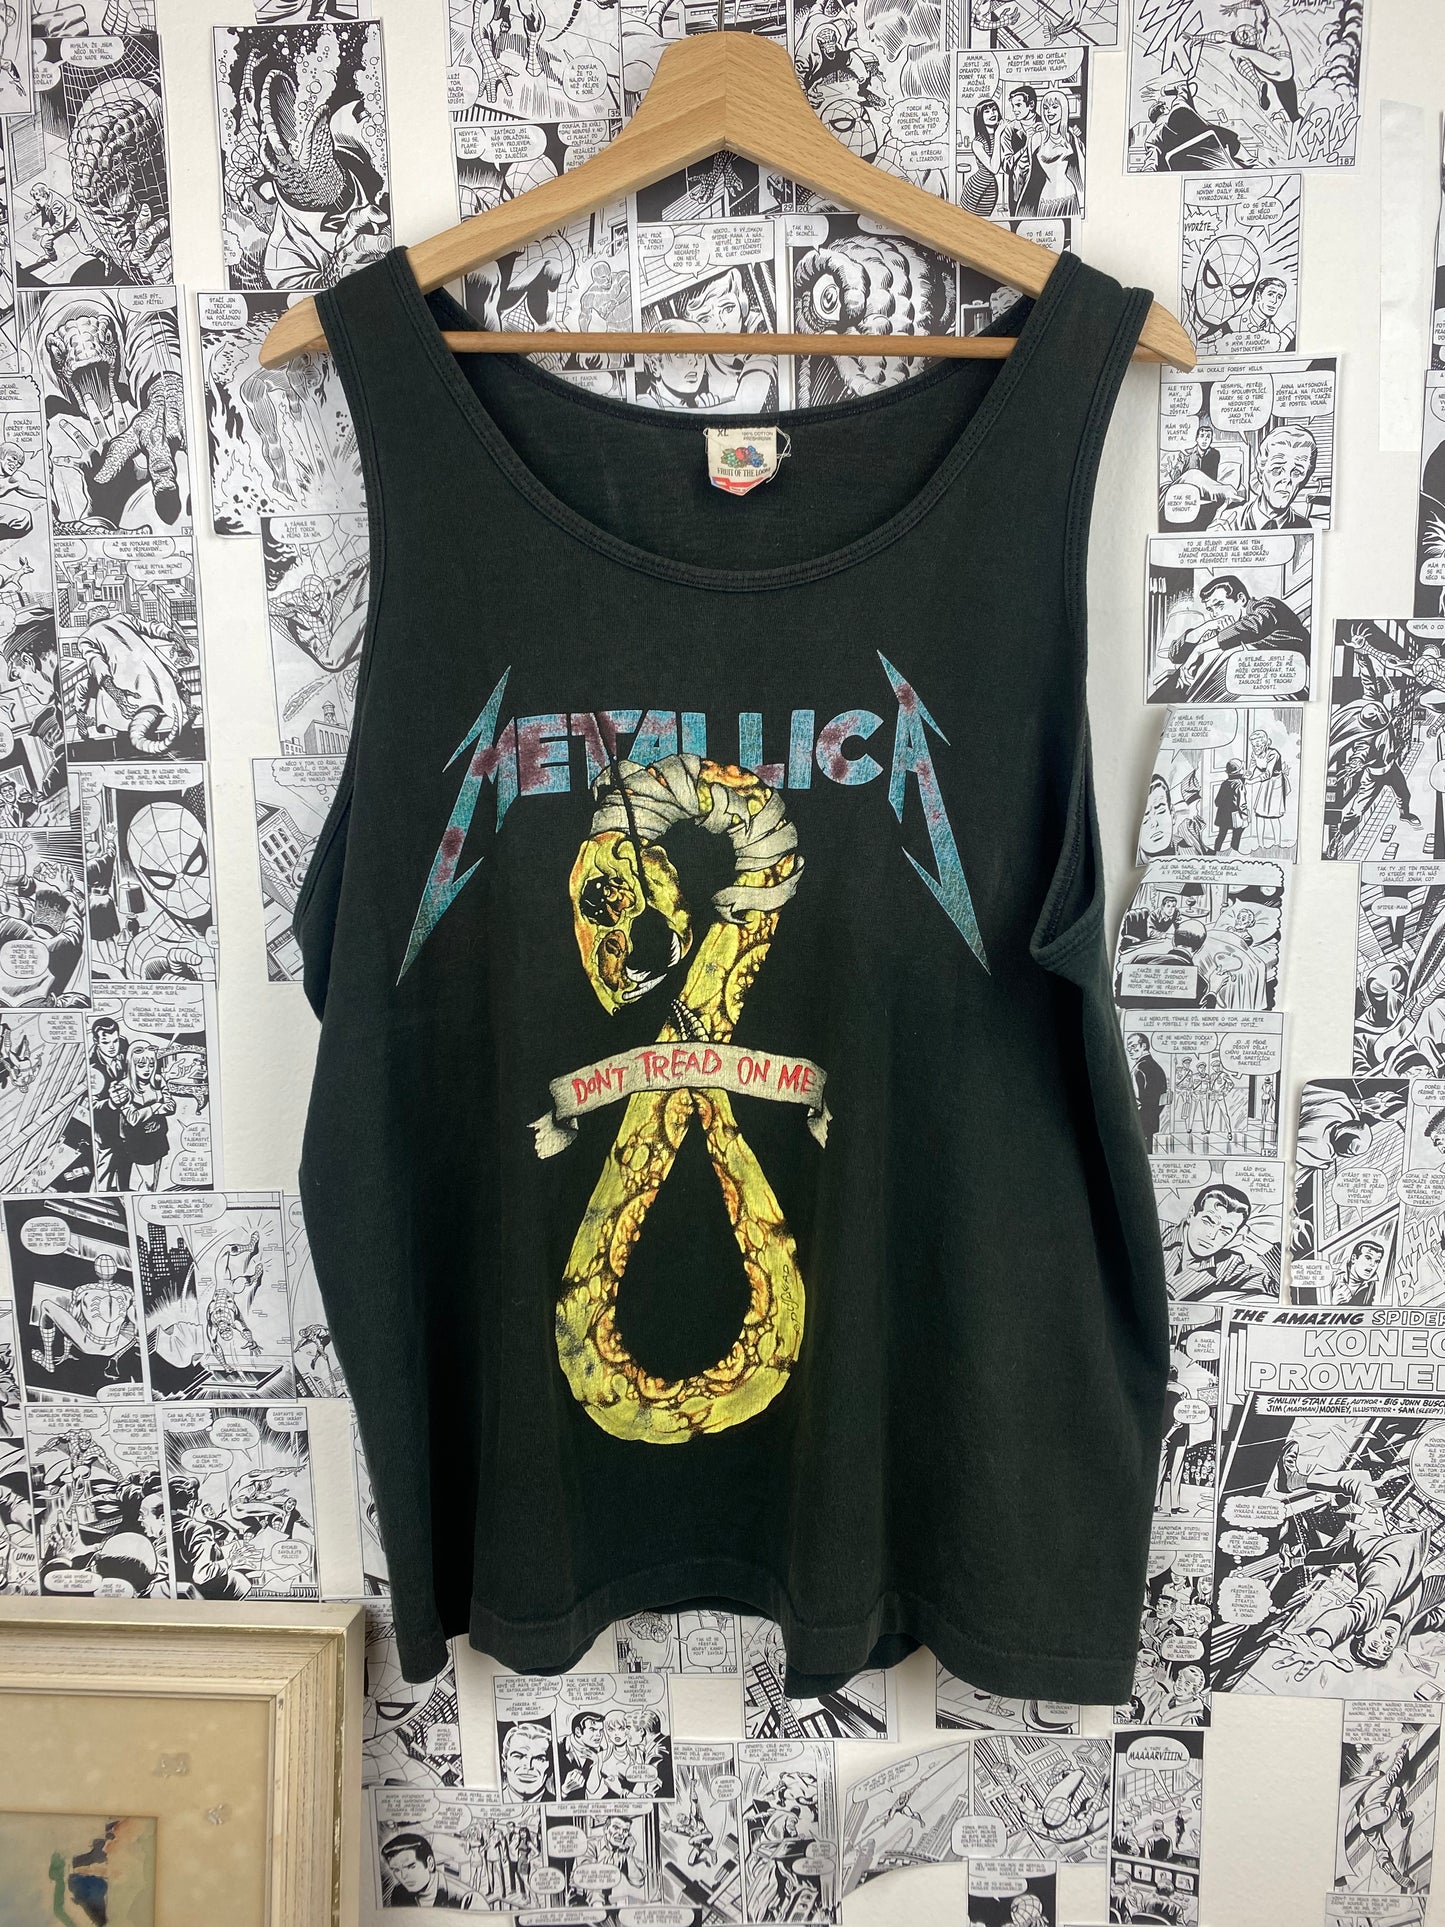 Vintage Metallica “Don’t tread on me” 1989 tank top t-shirt - size L